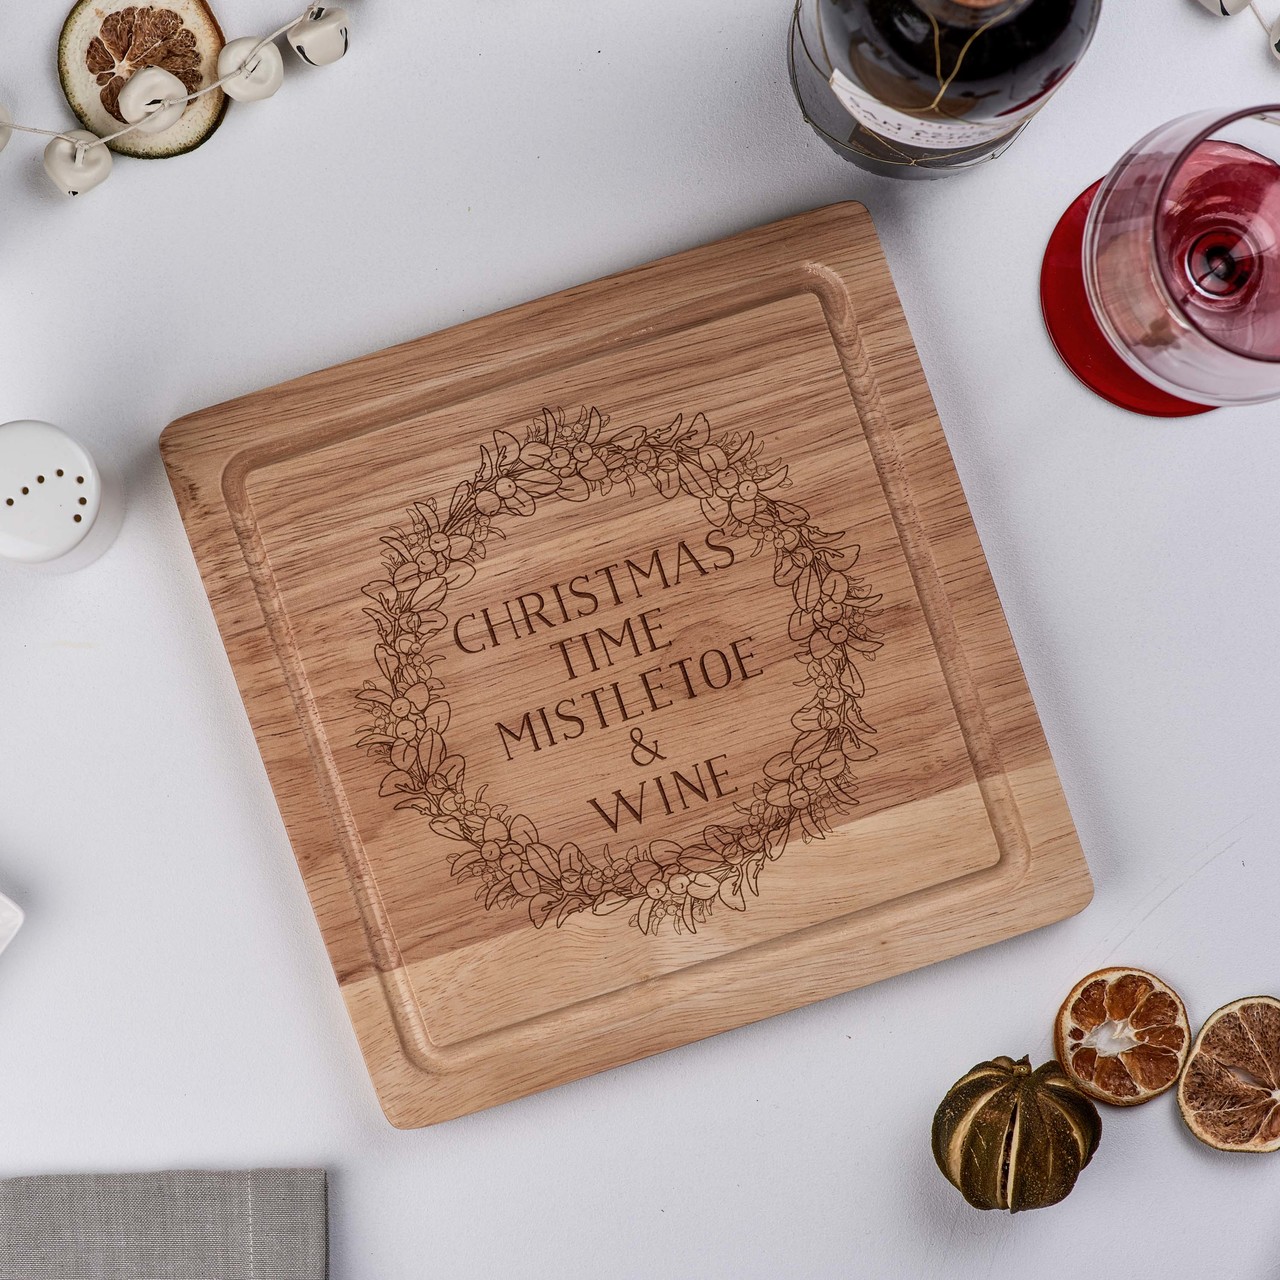 Personalised – Mistletoe and Wine Wooden Board